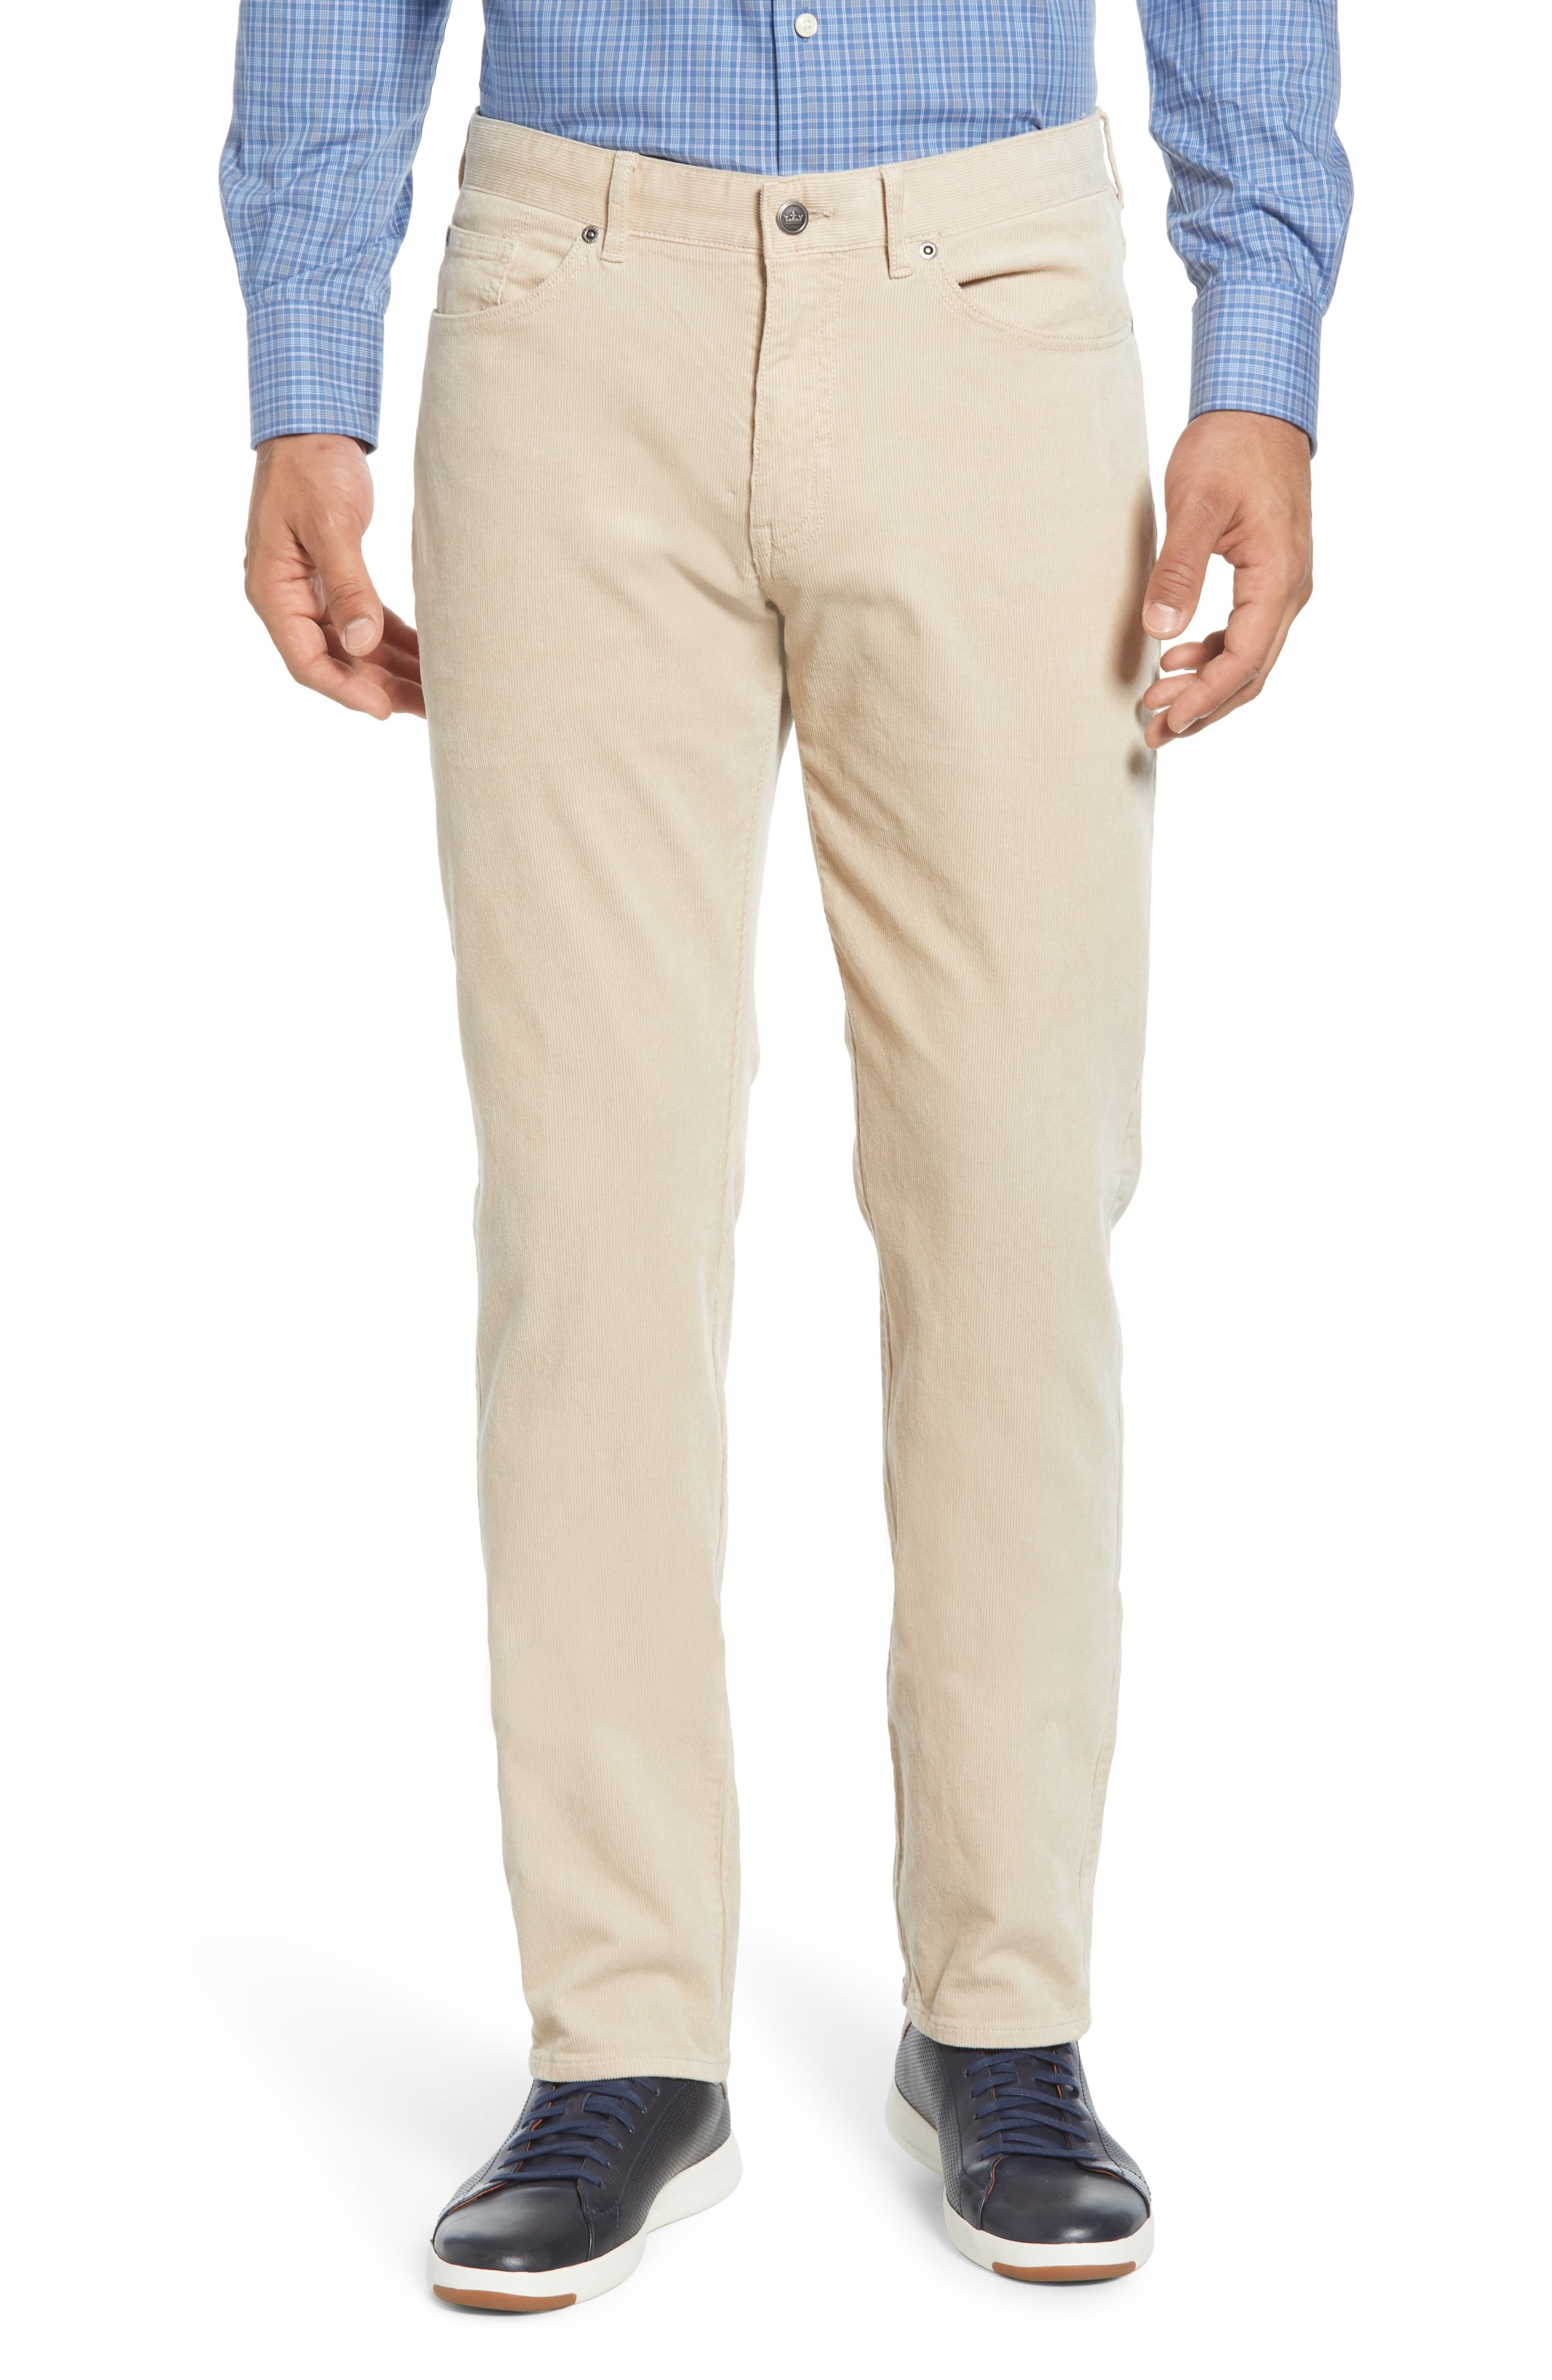 Peter Millar Superior Soft Five Pocket Corduroy Pants, $149, Nordstrom